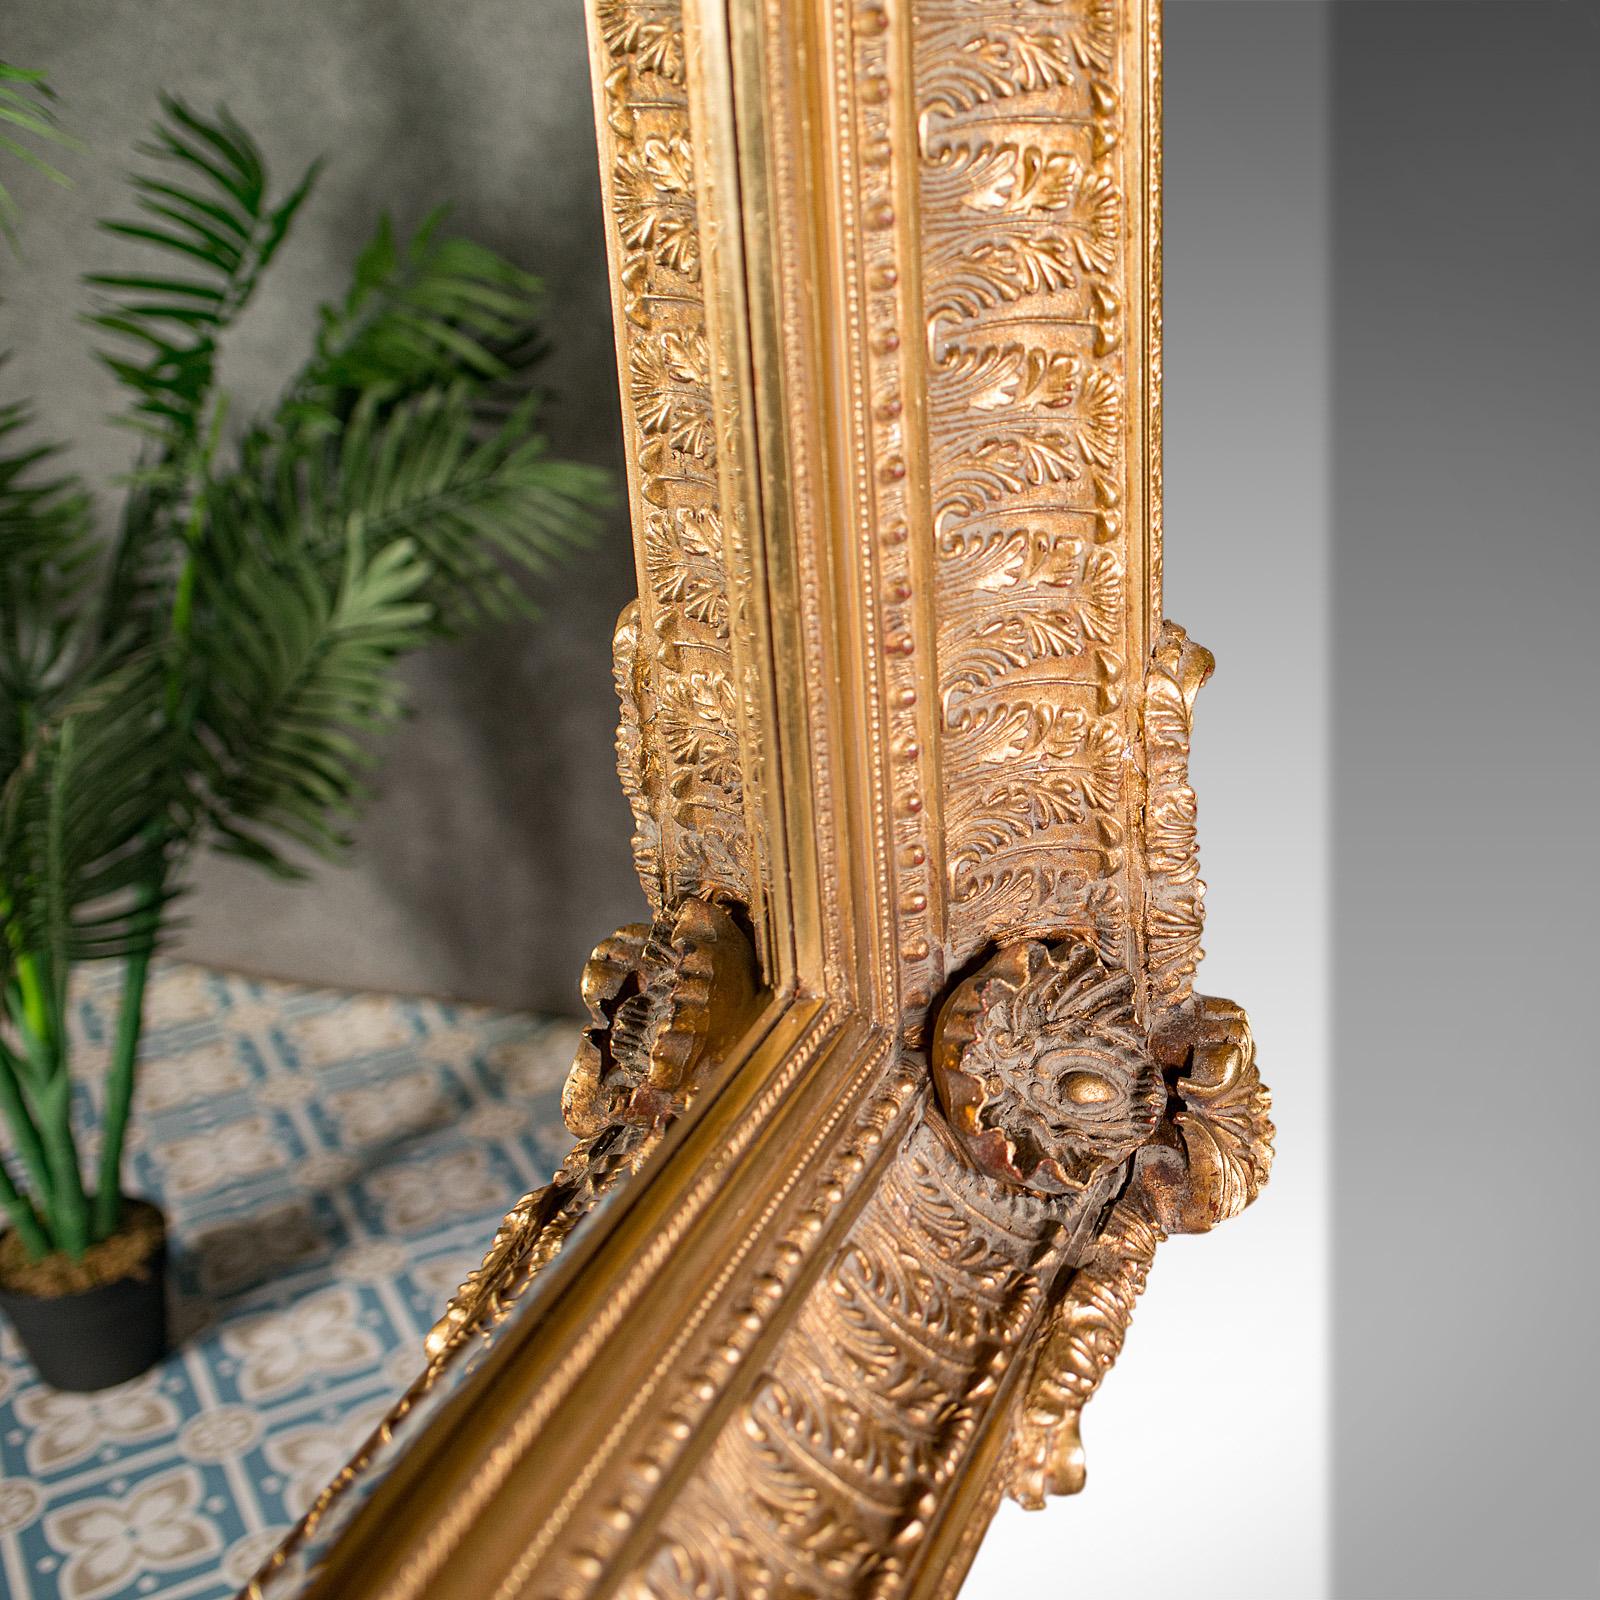 Large Vintage Renaissance Revival Wall Mirror, Continental, Giltwood, Decorative For Sale 2